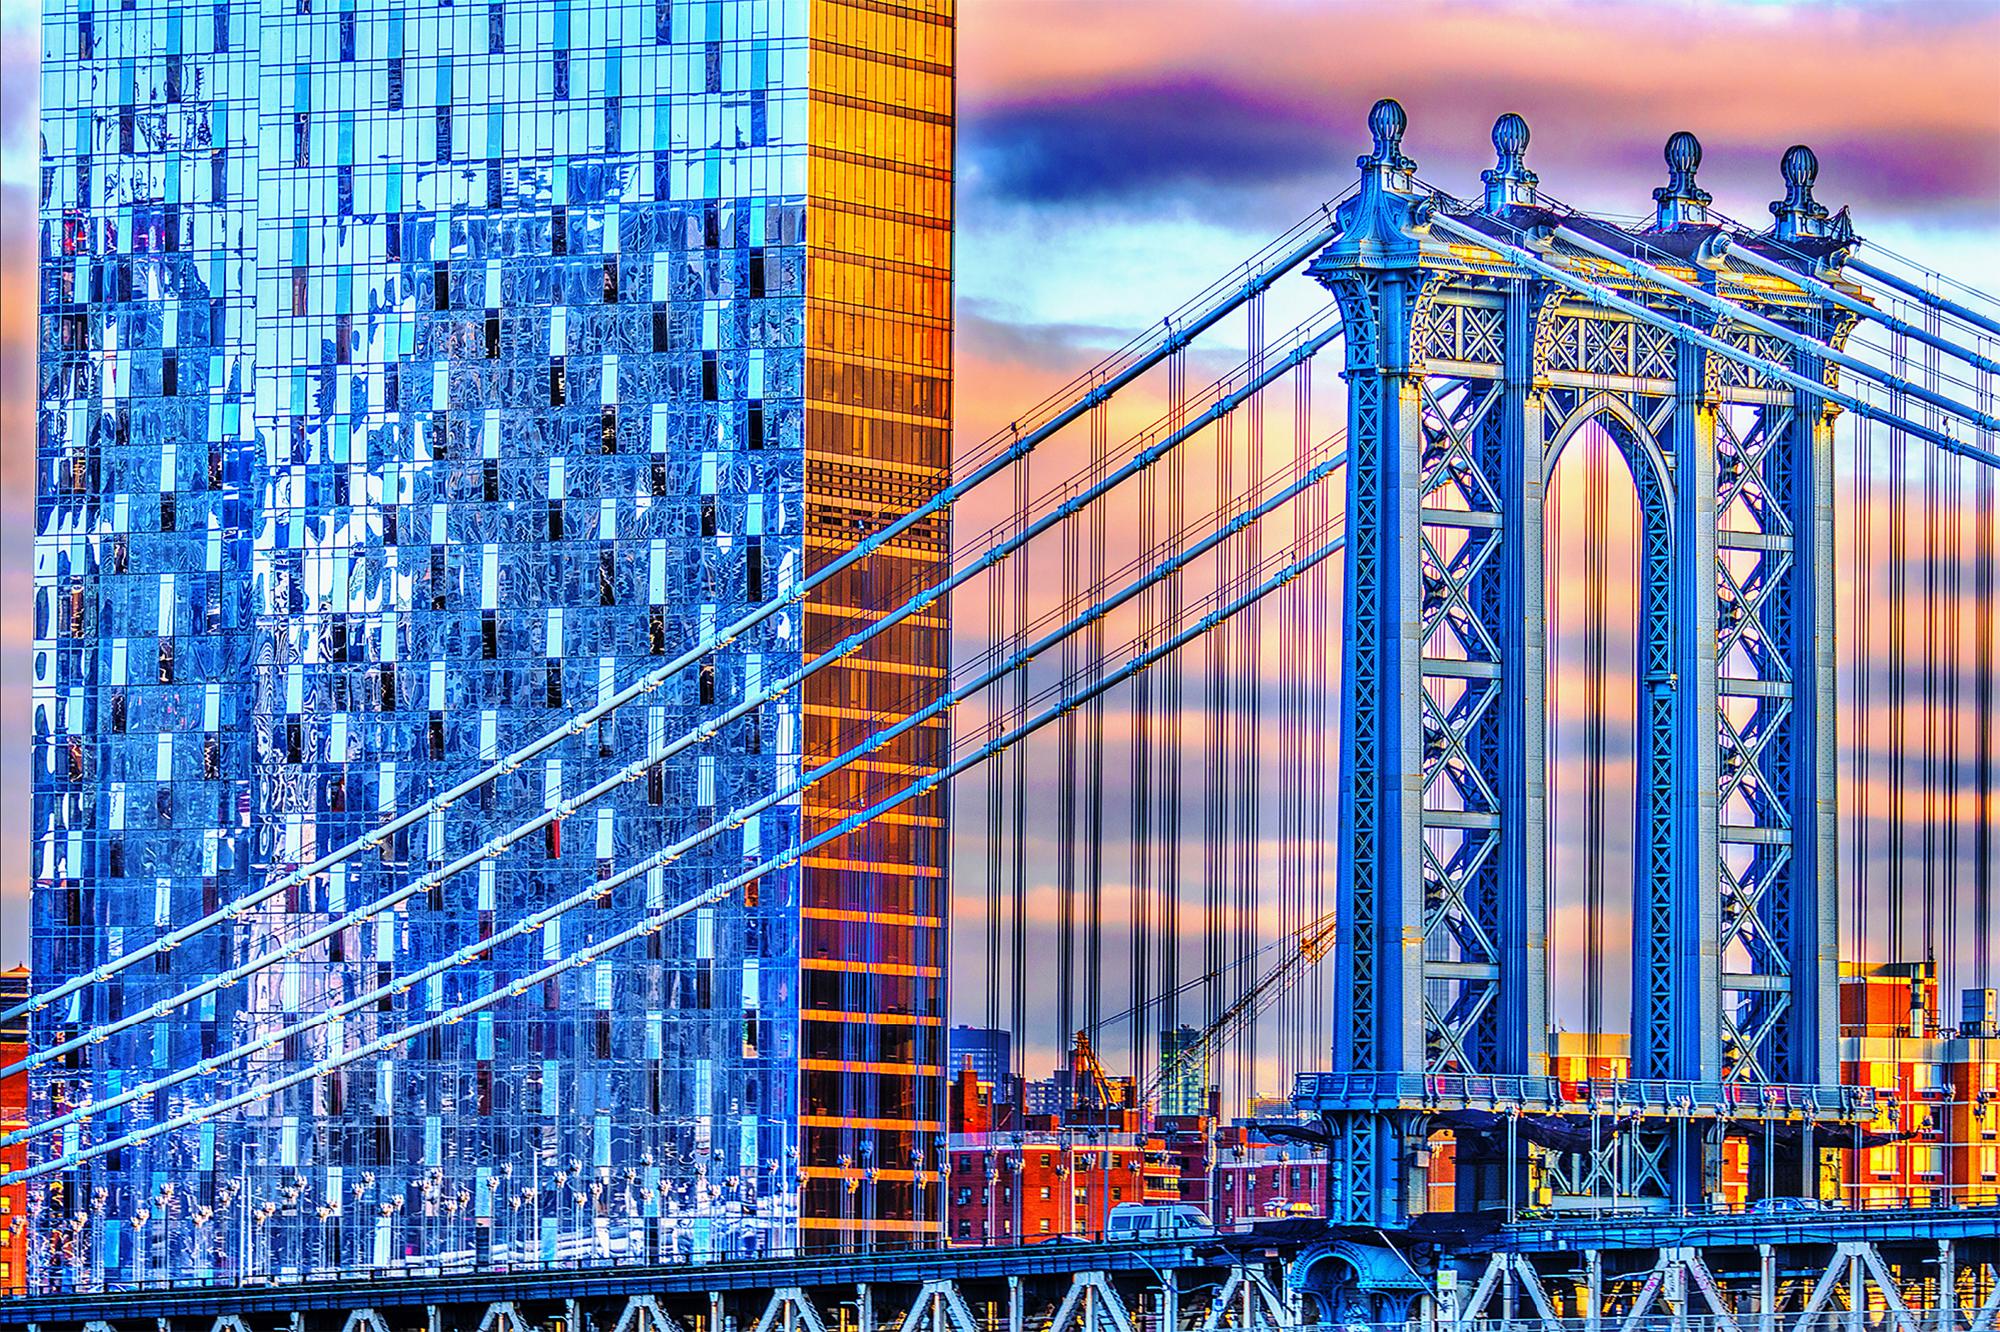 Manhattan Bridge from Brooklyn in Blue and Gold